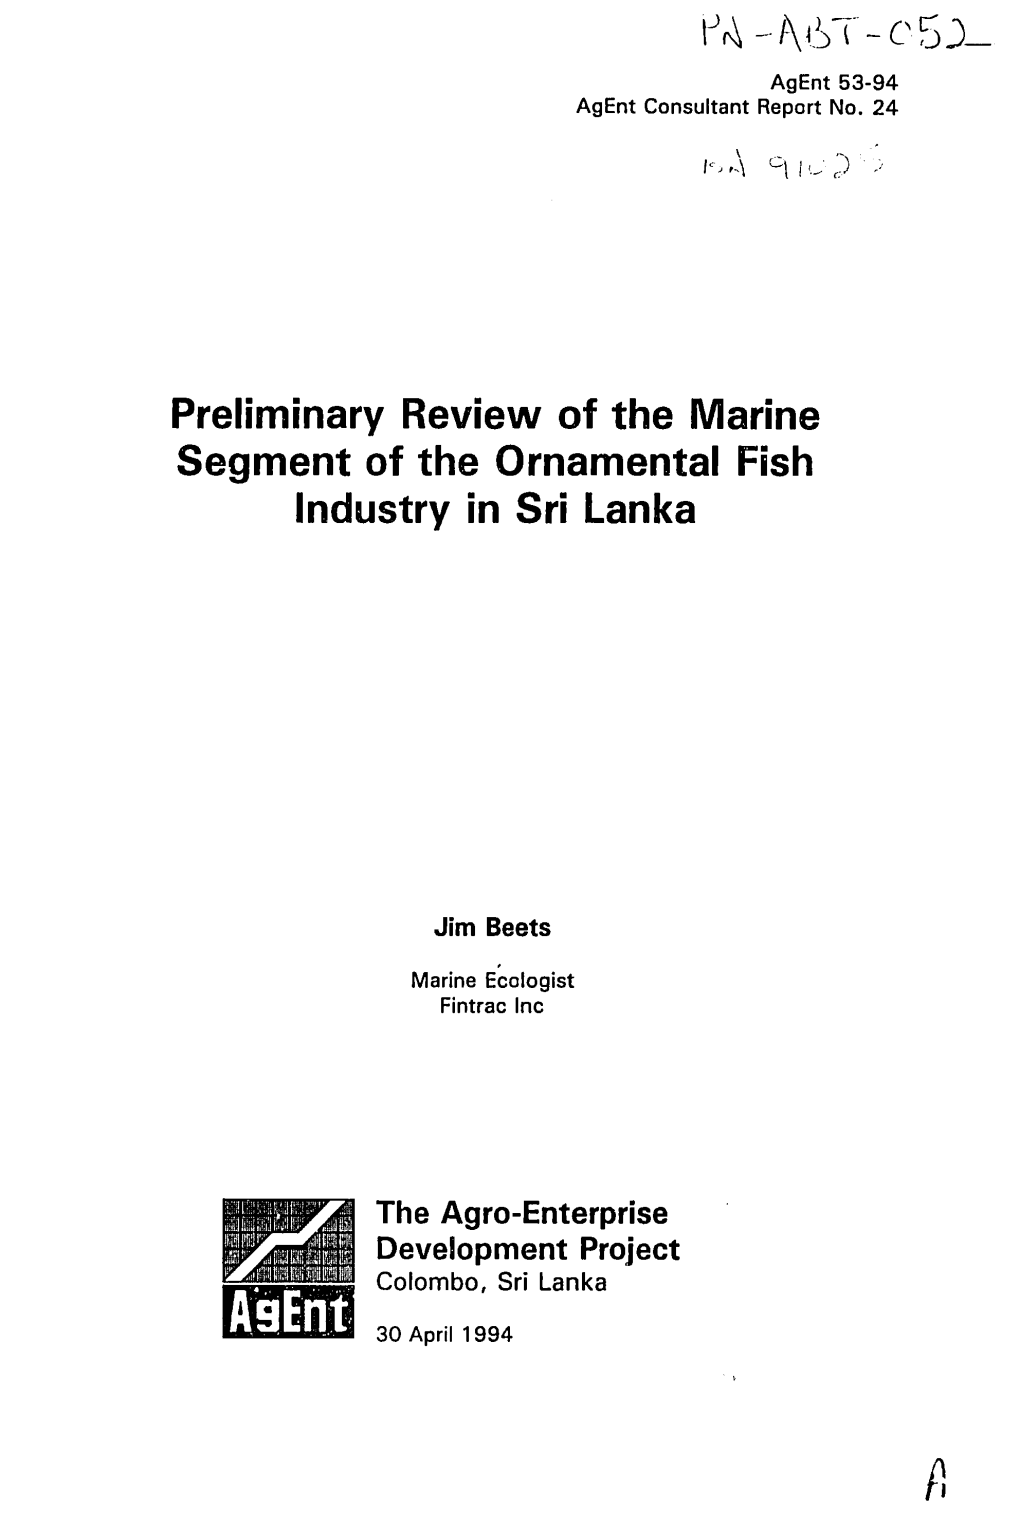 Preliminary Review of the Marine Segment of the Ornamental Fish Industry in Sri Lanka